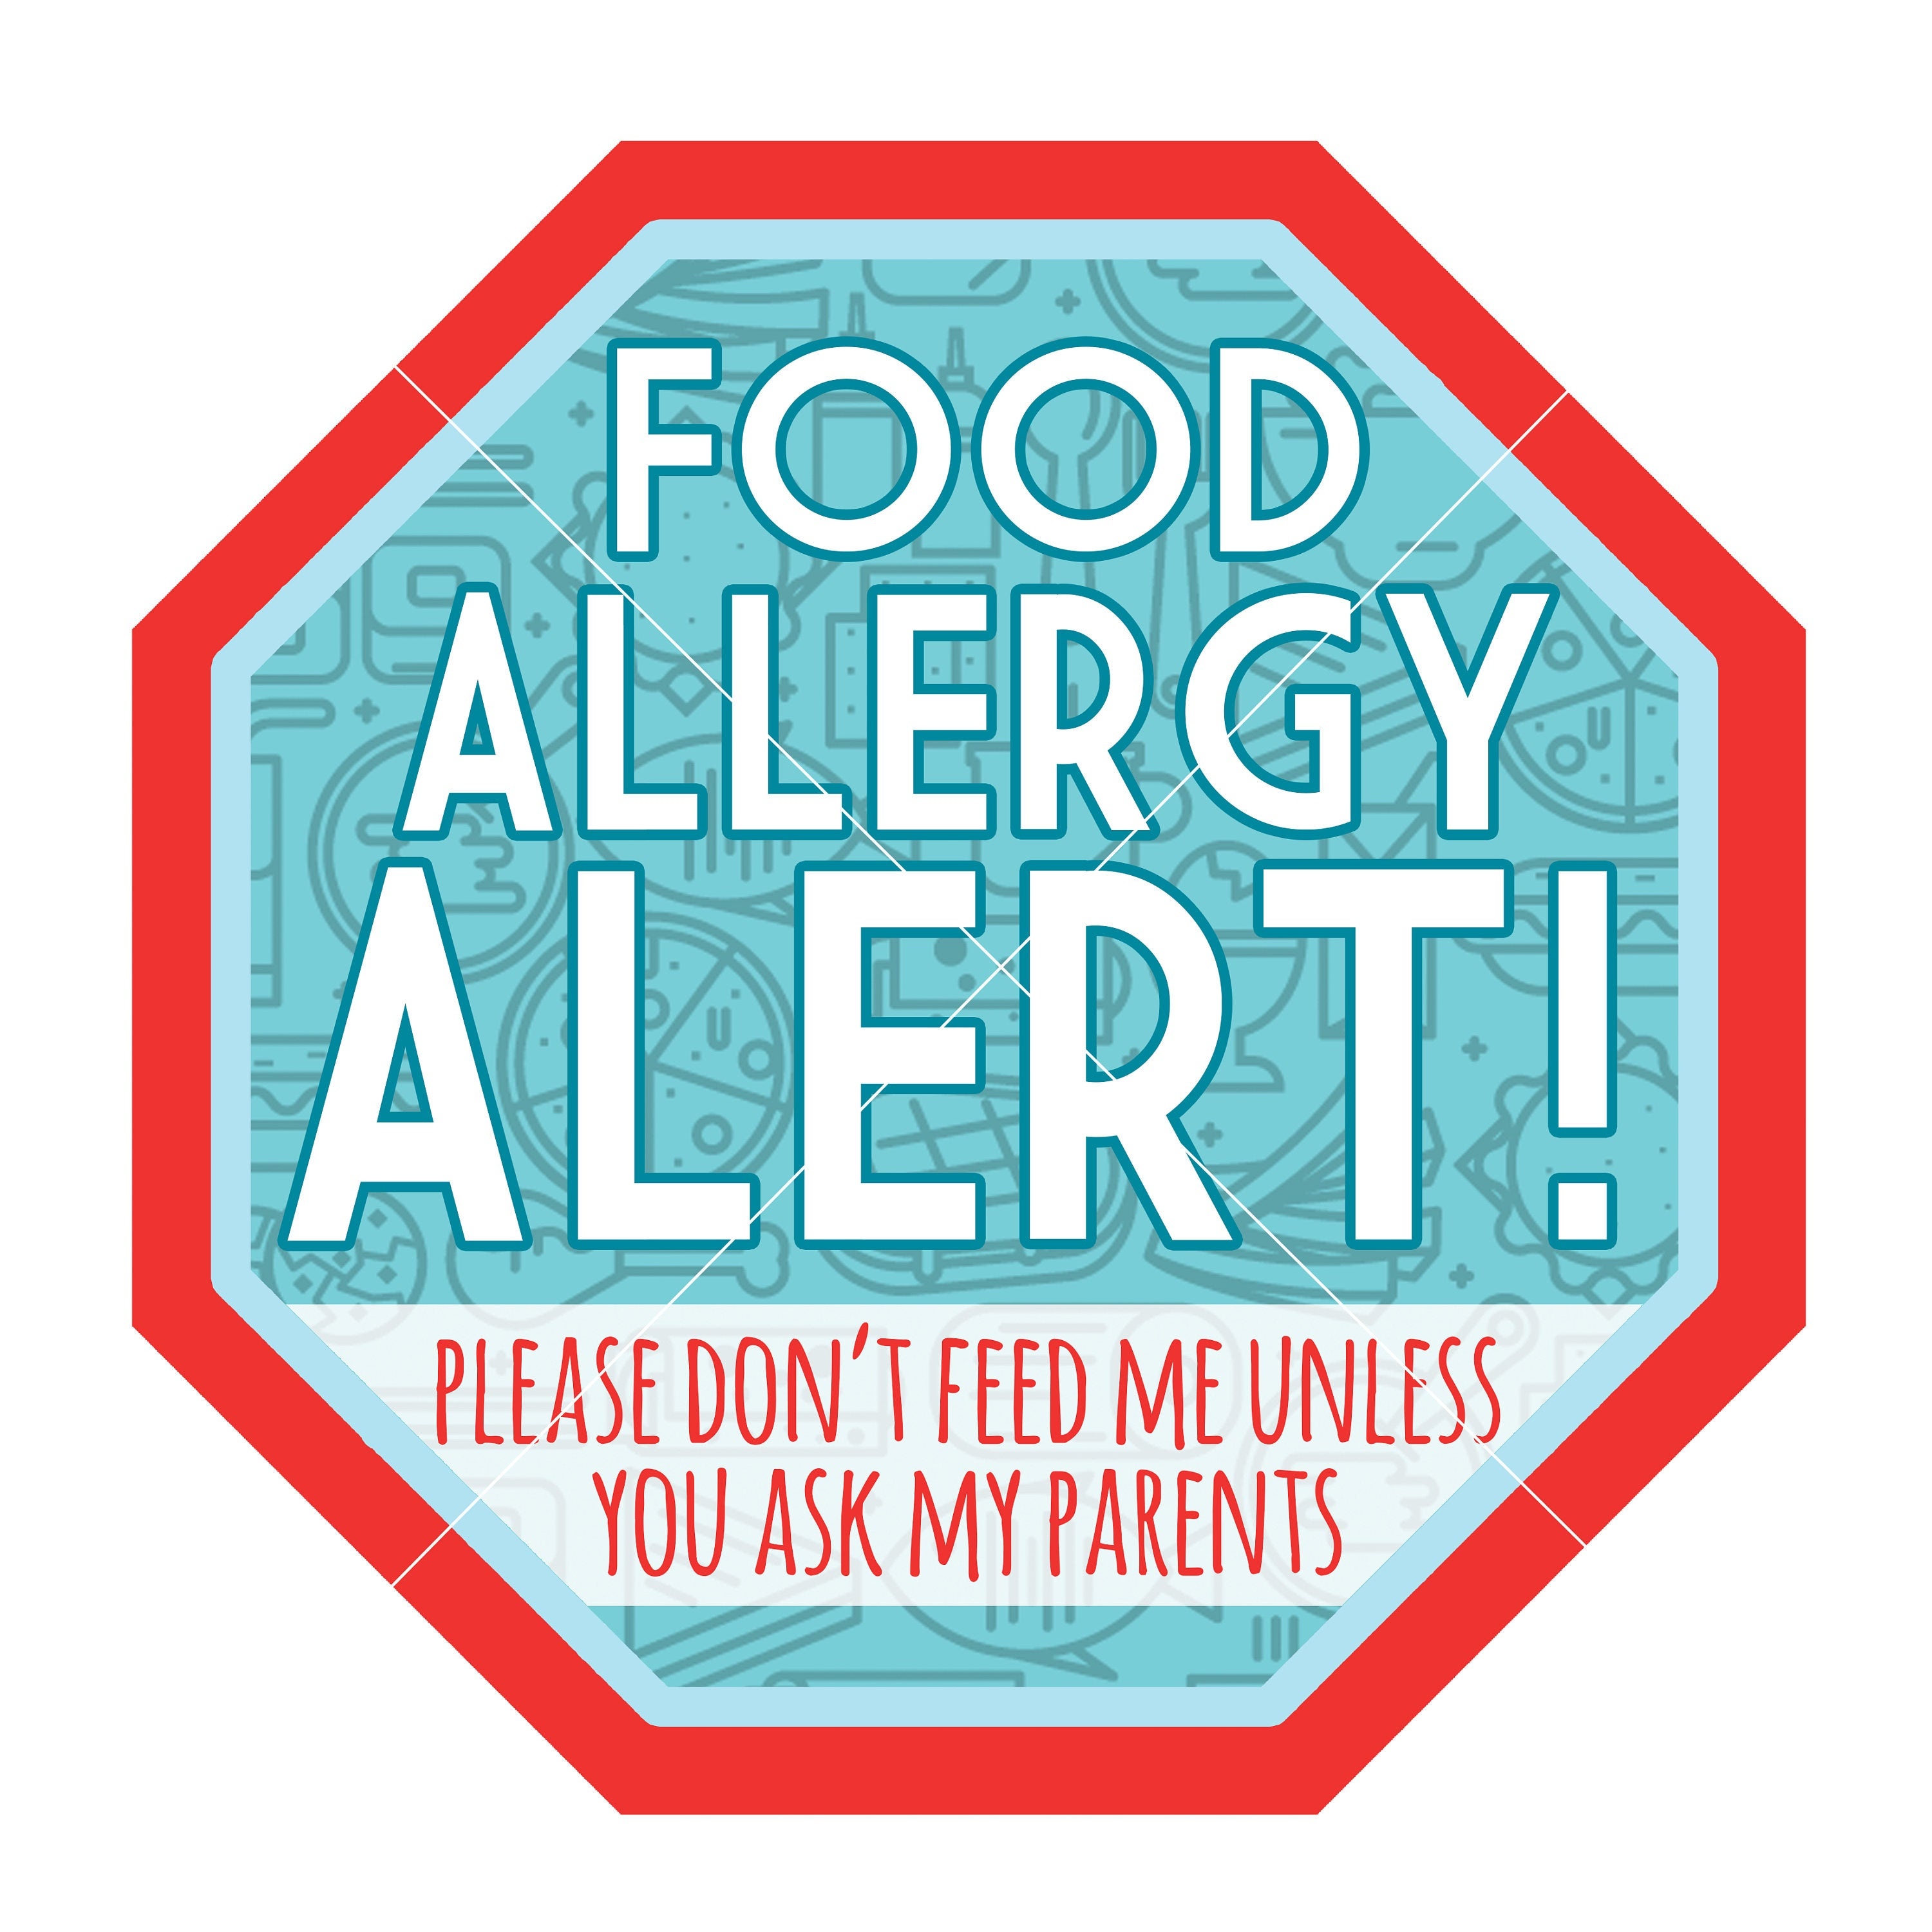 free-printable-allergy-warning-signs-printable-world-holiday